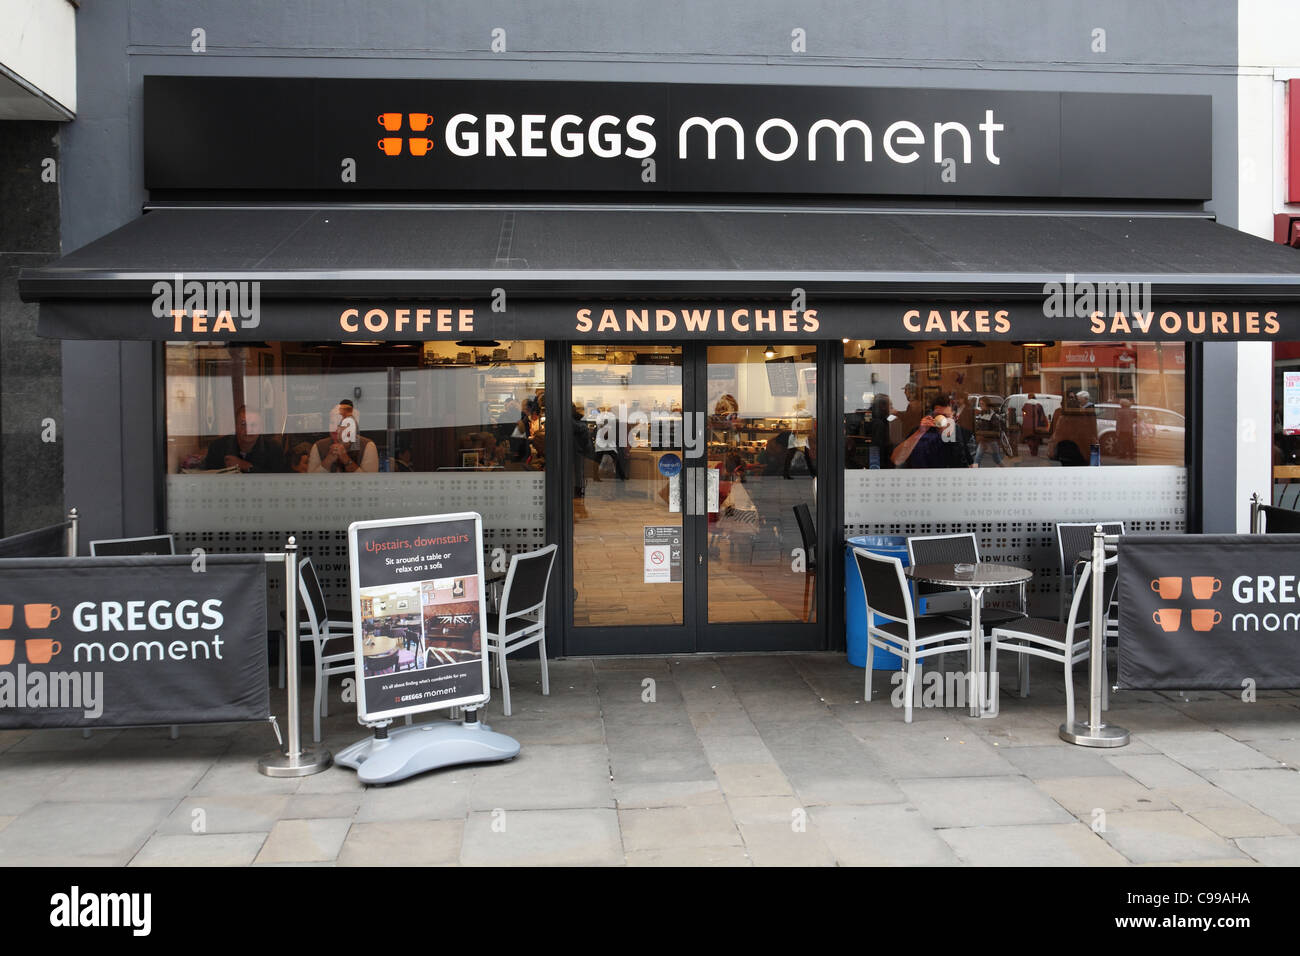 Greggs nouveau jusqu'market café Moment Greggs, Northumberland Street, Newcastle upon Tyne, Angleterre du Nord-Est, Royaume-Uni Banque D'Images